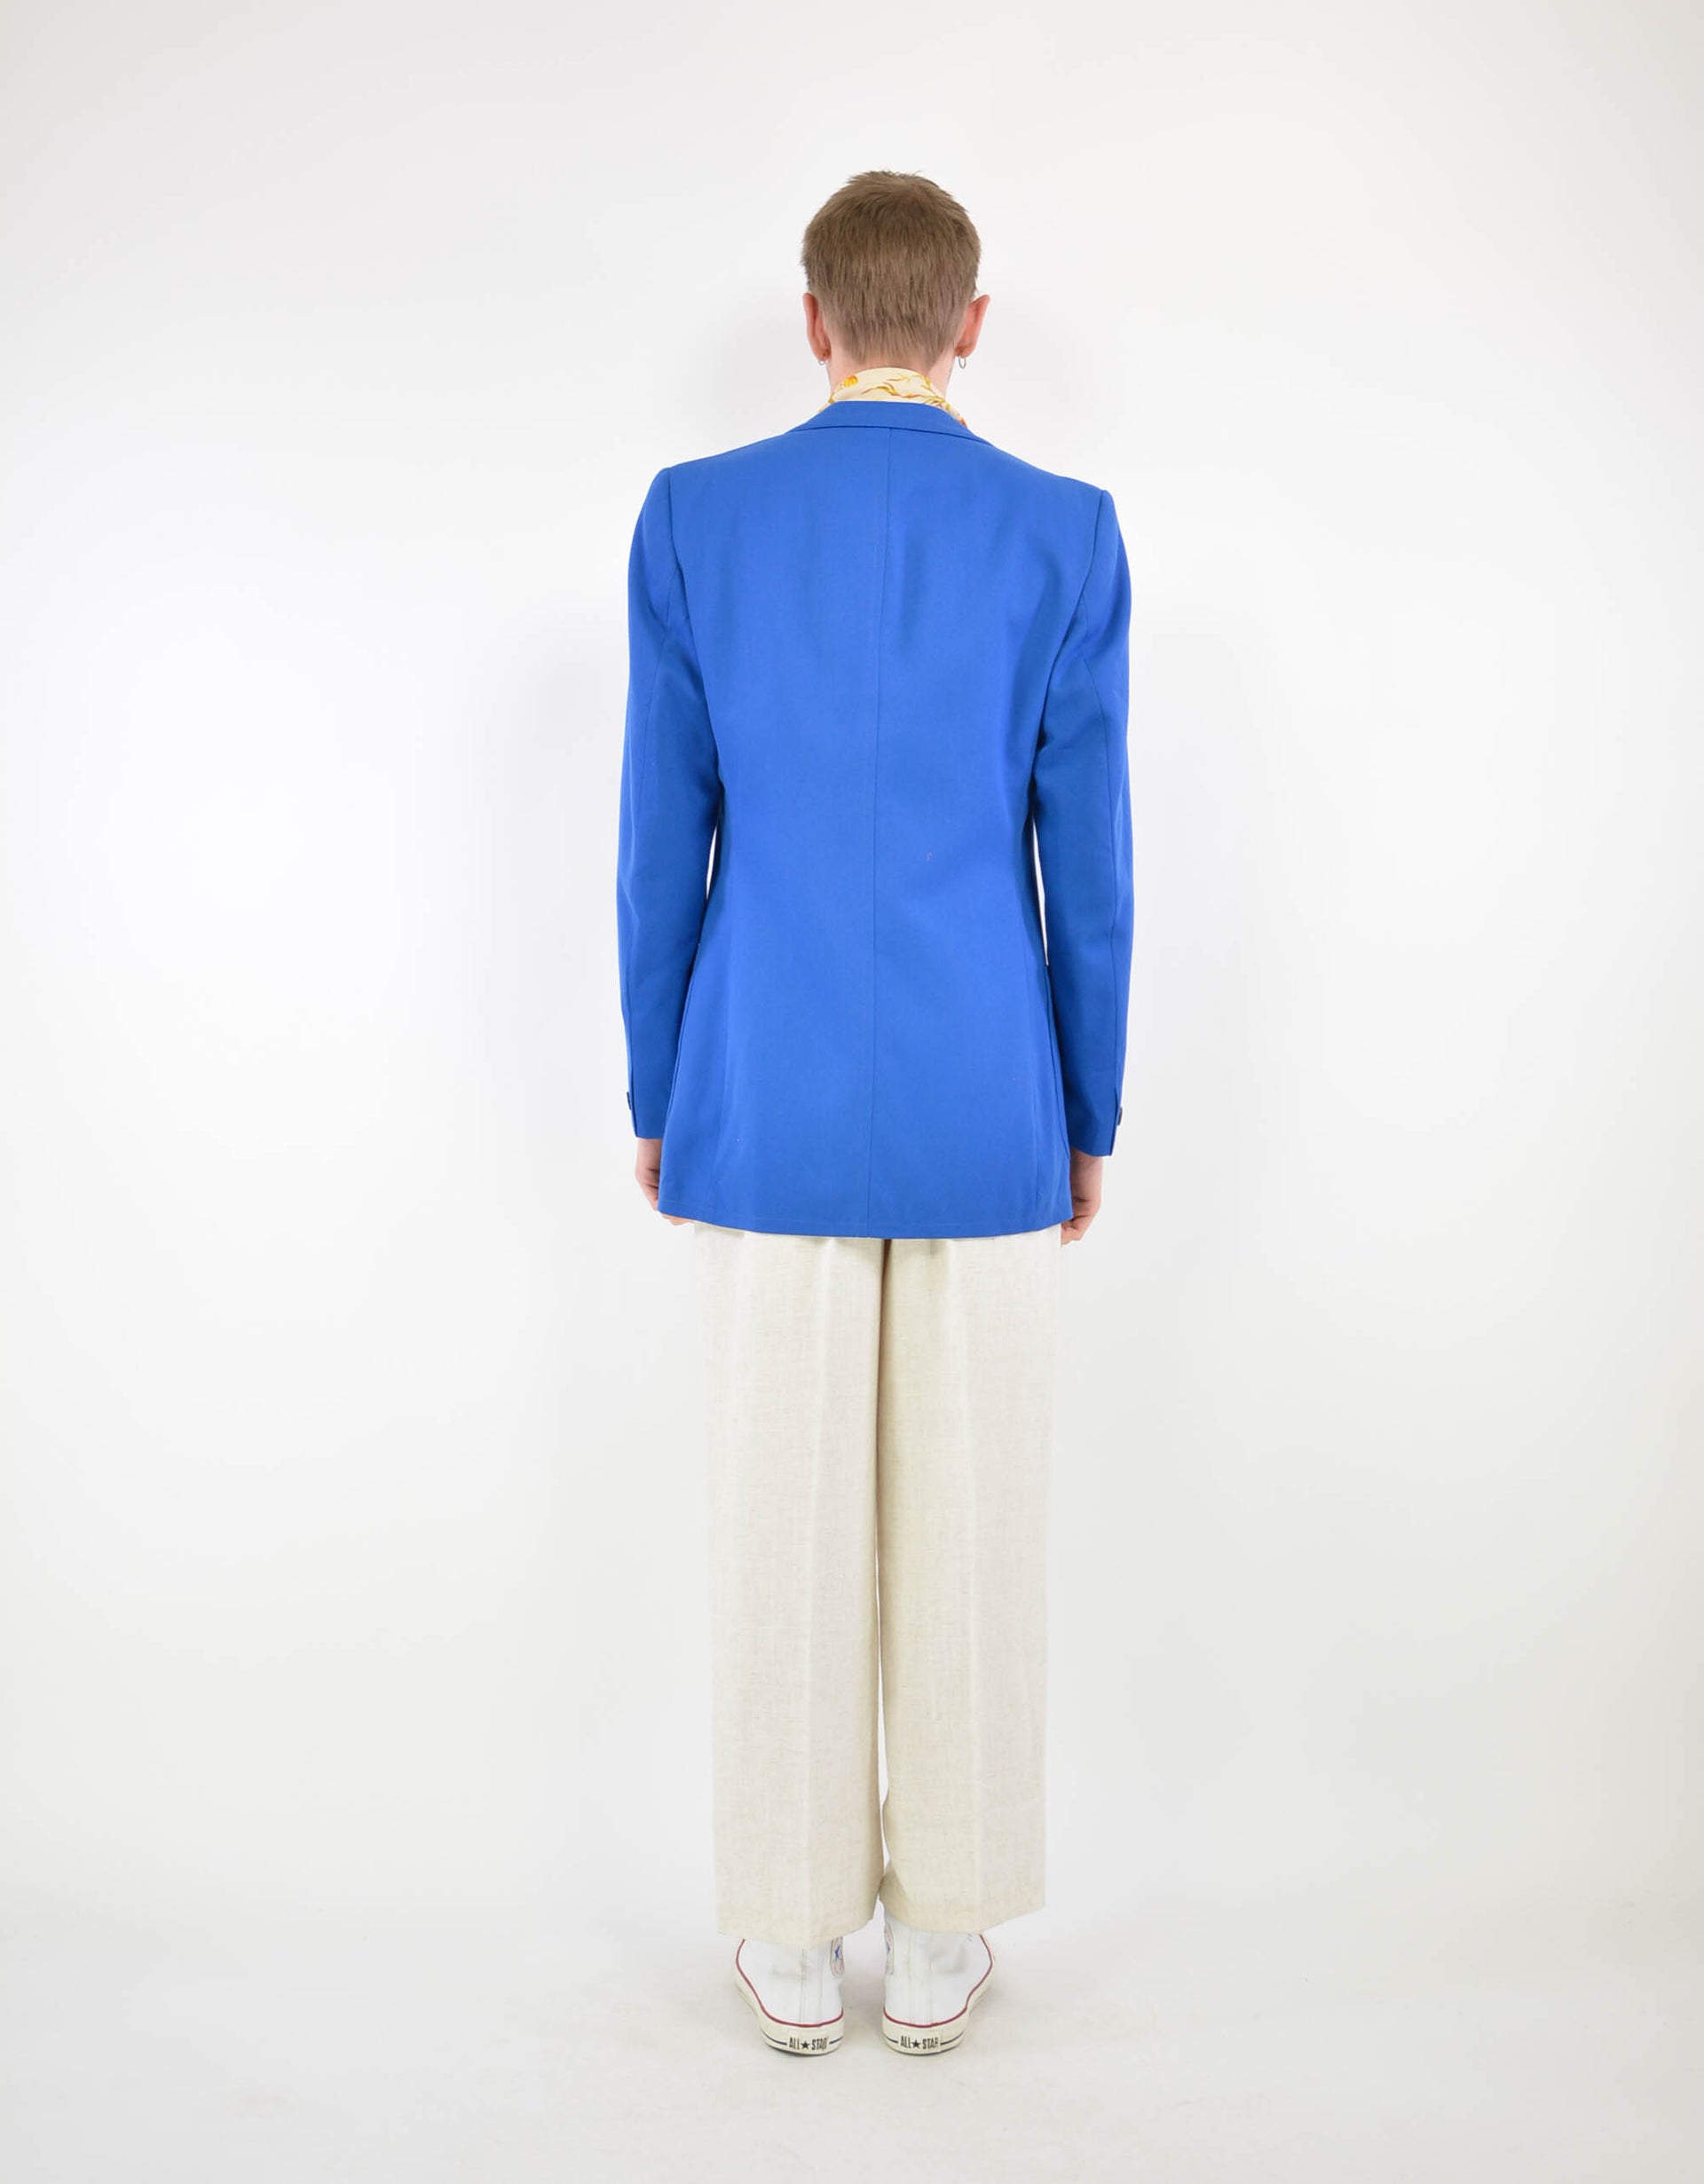 80s blue suit jacket - PICKNWEIGHT - VINTAGE KILO STORE